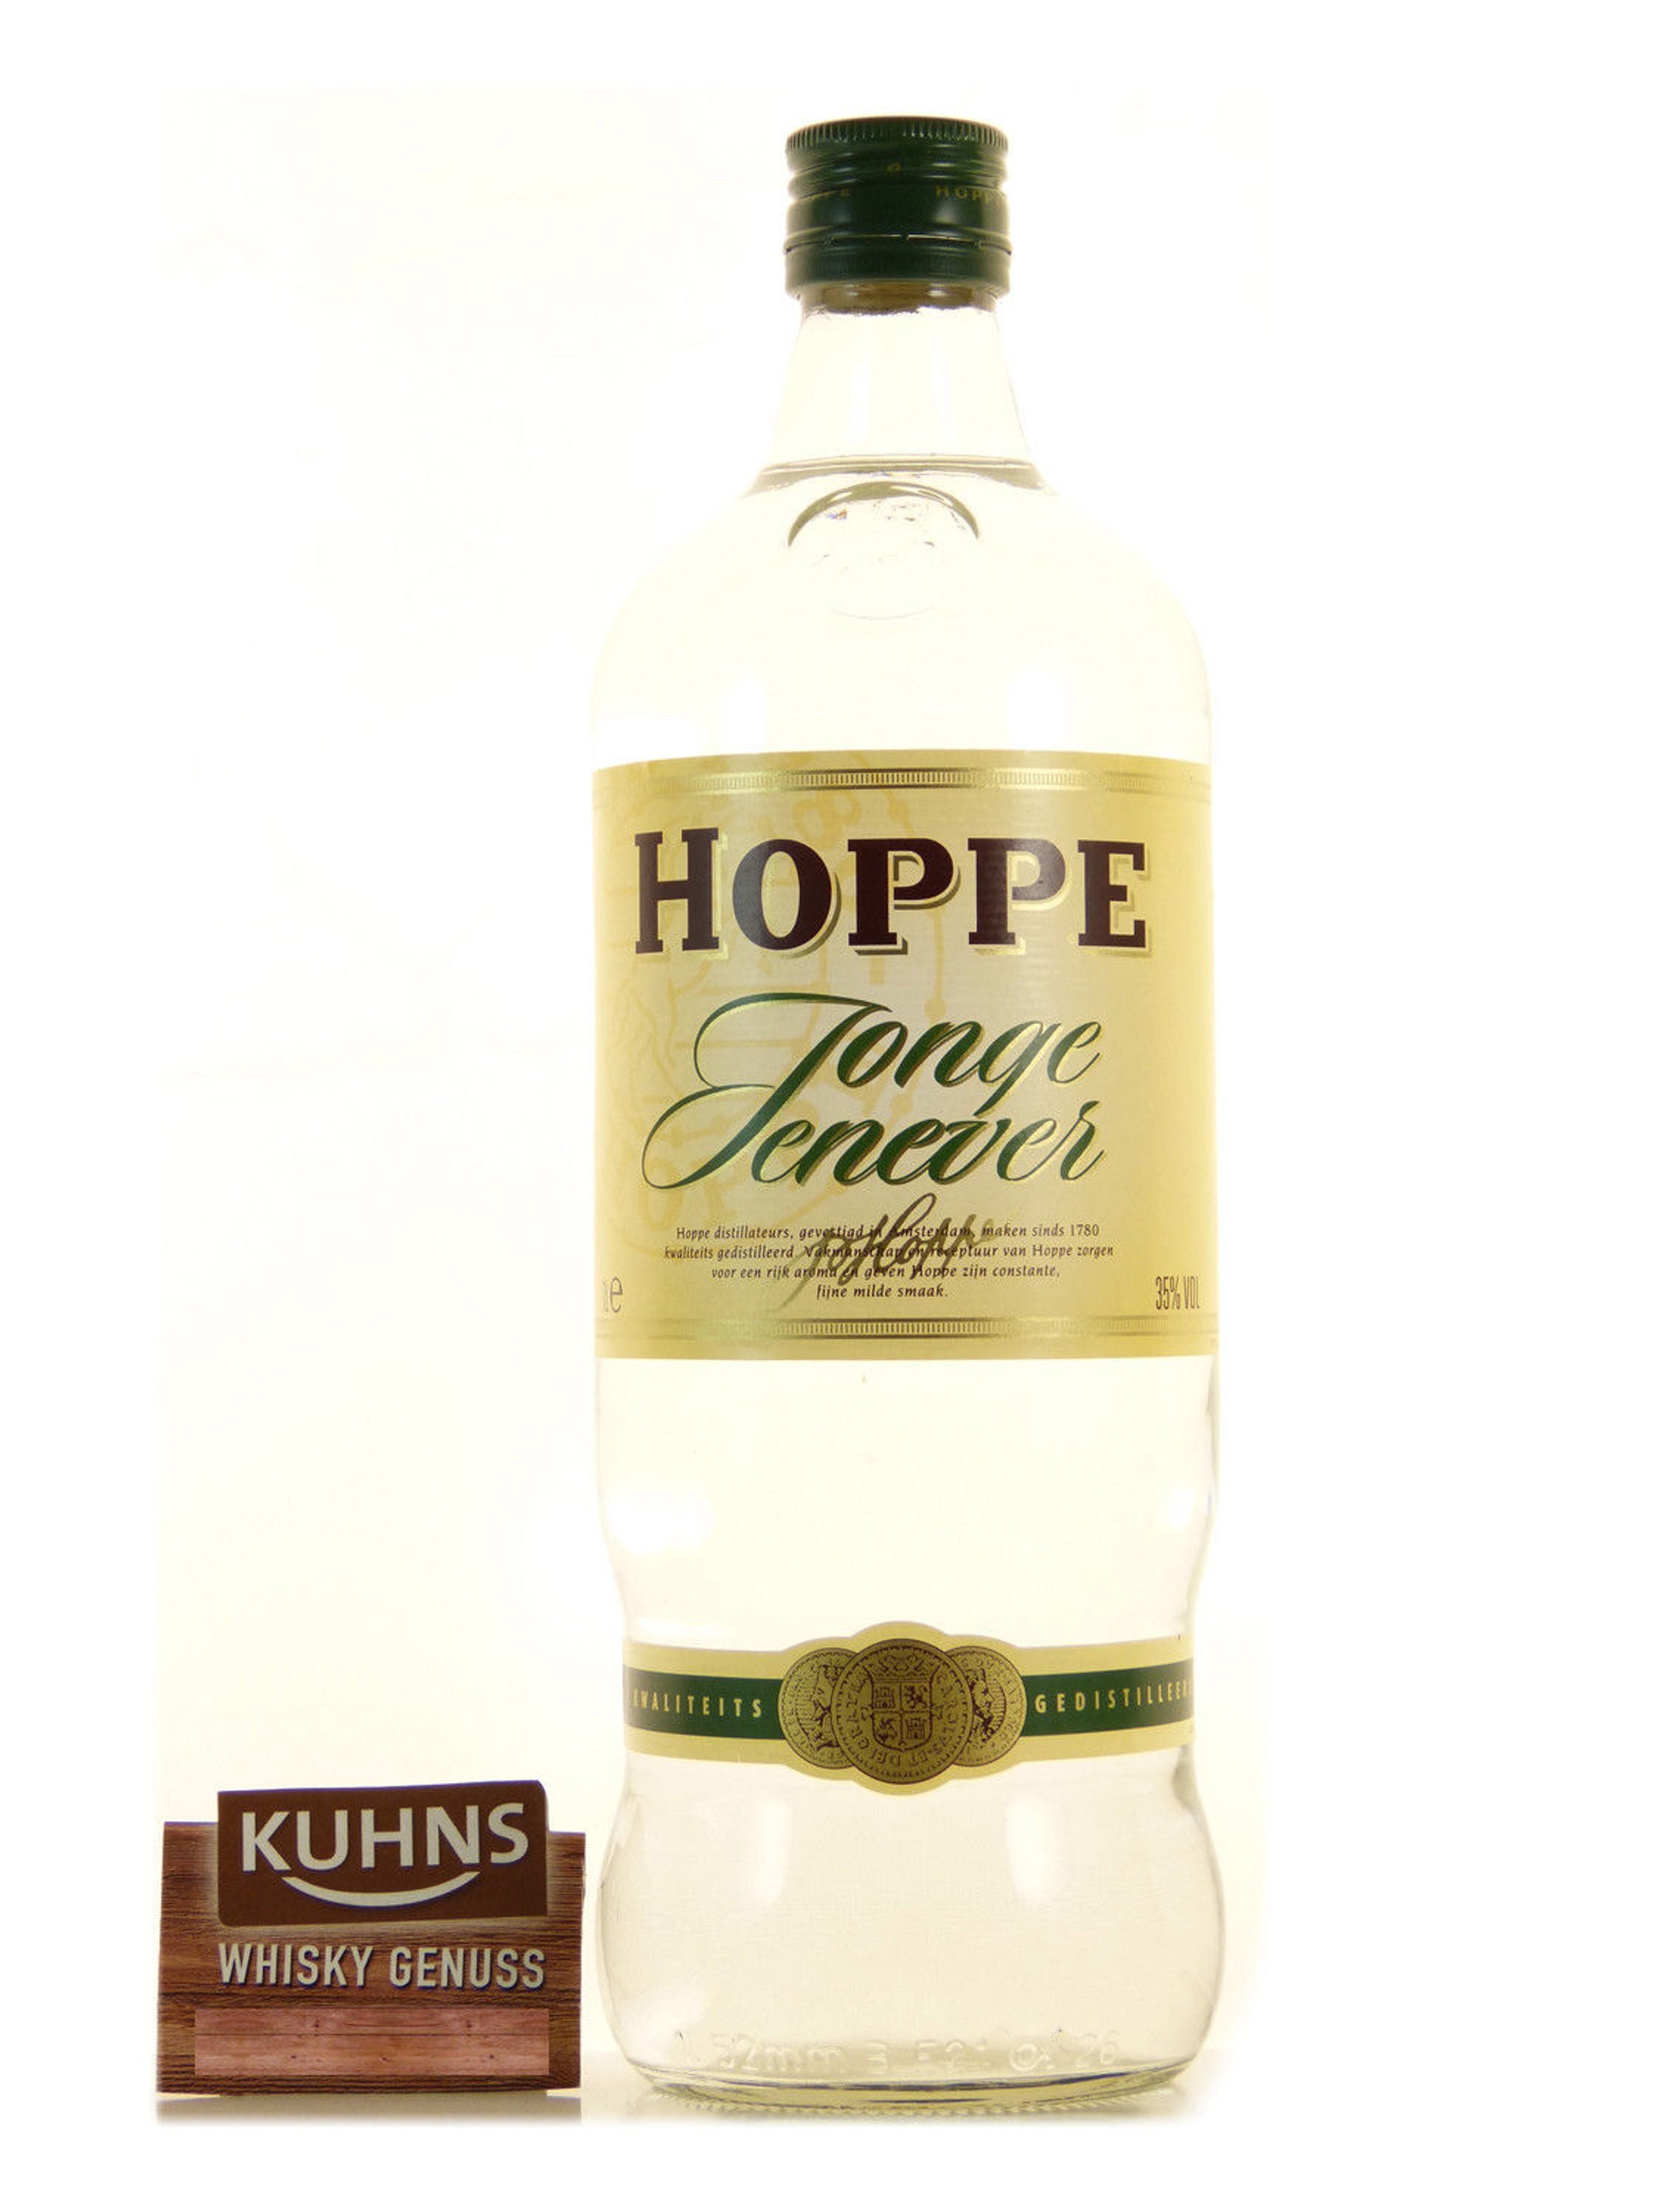 Hoppe Jonge Jenever Gin Netherlands 1.0l, alc. 35% by volume